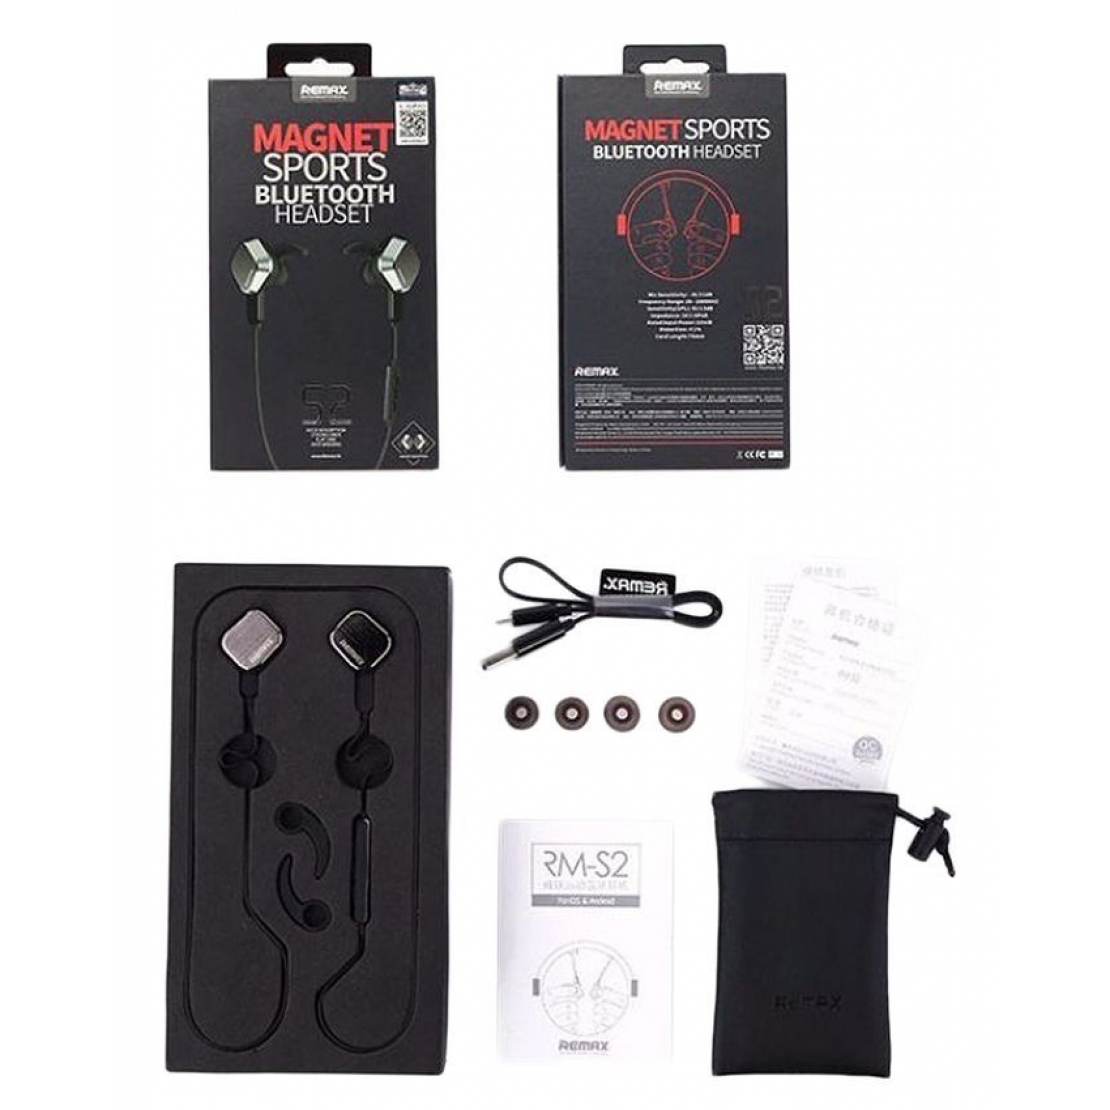 Remax-RB-S2-Sports-Magnet-Bluetooth-Headset-Black